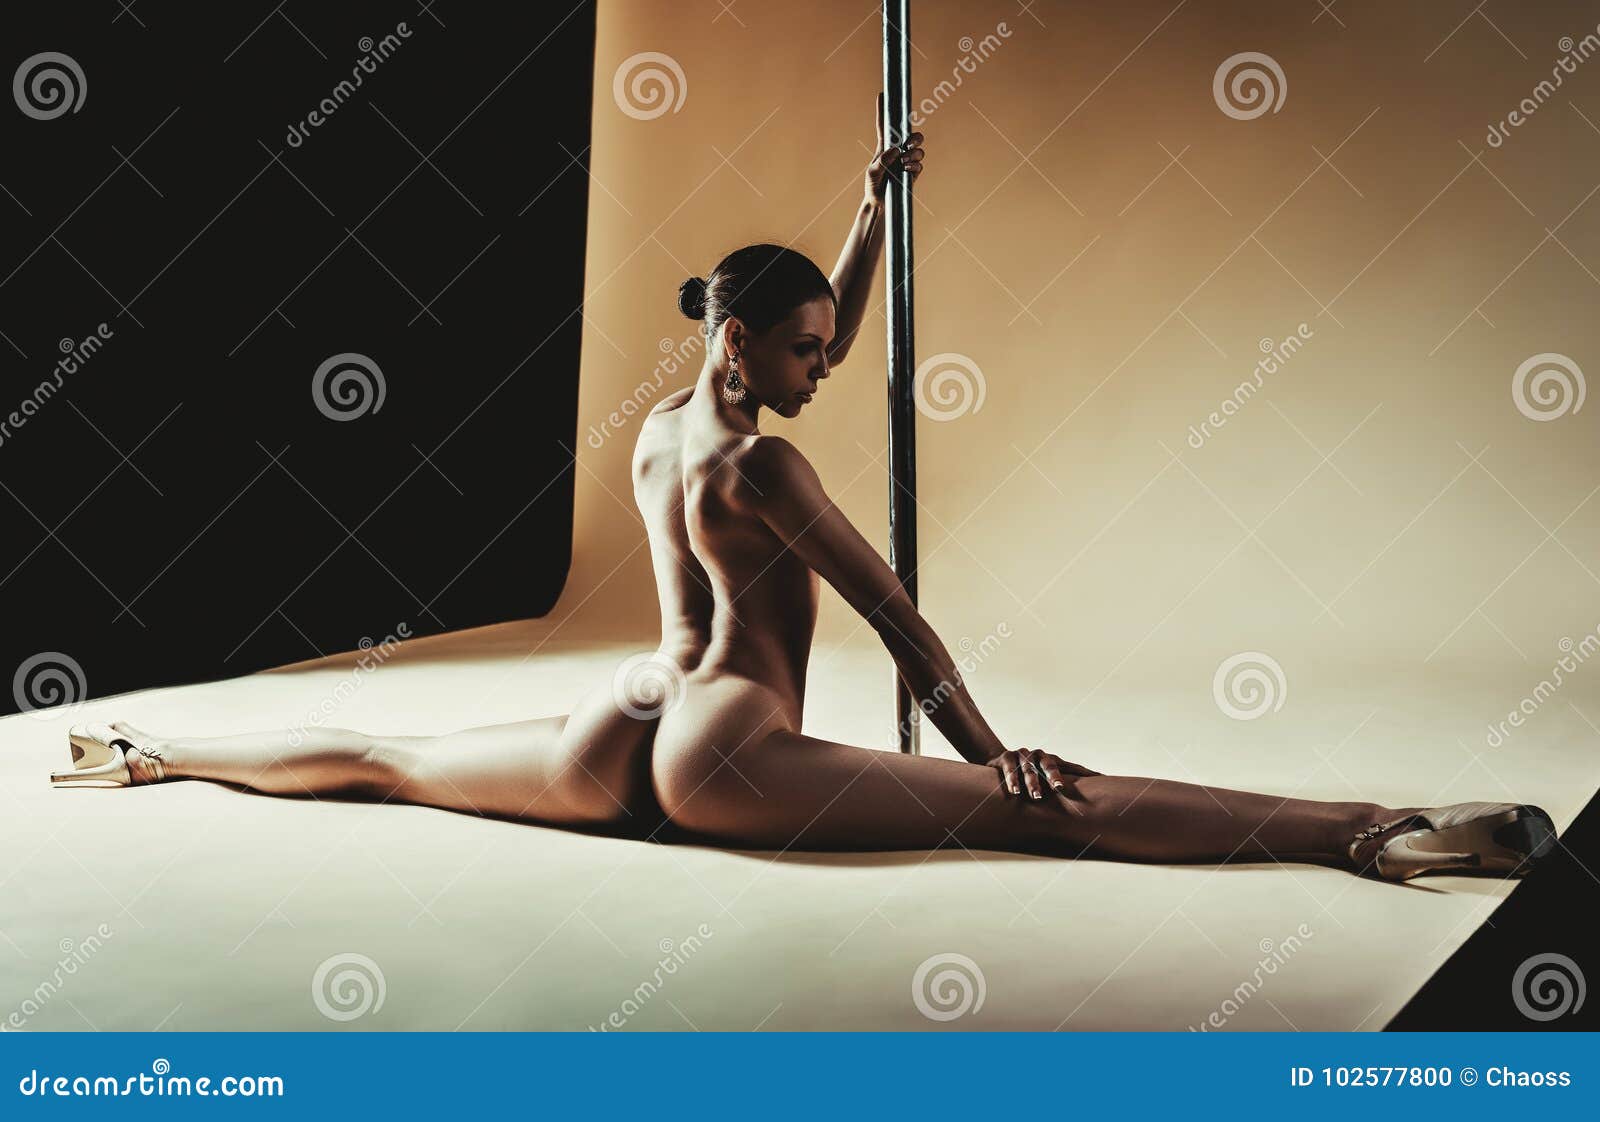 derek nielson recommends Naked Women Pole Dancing